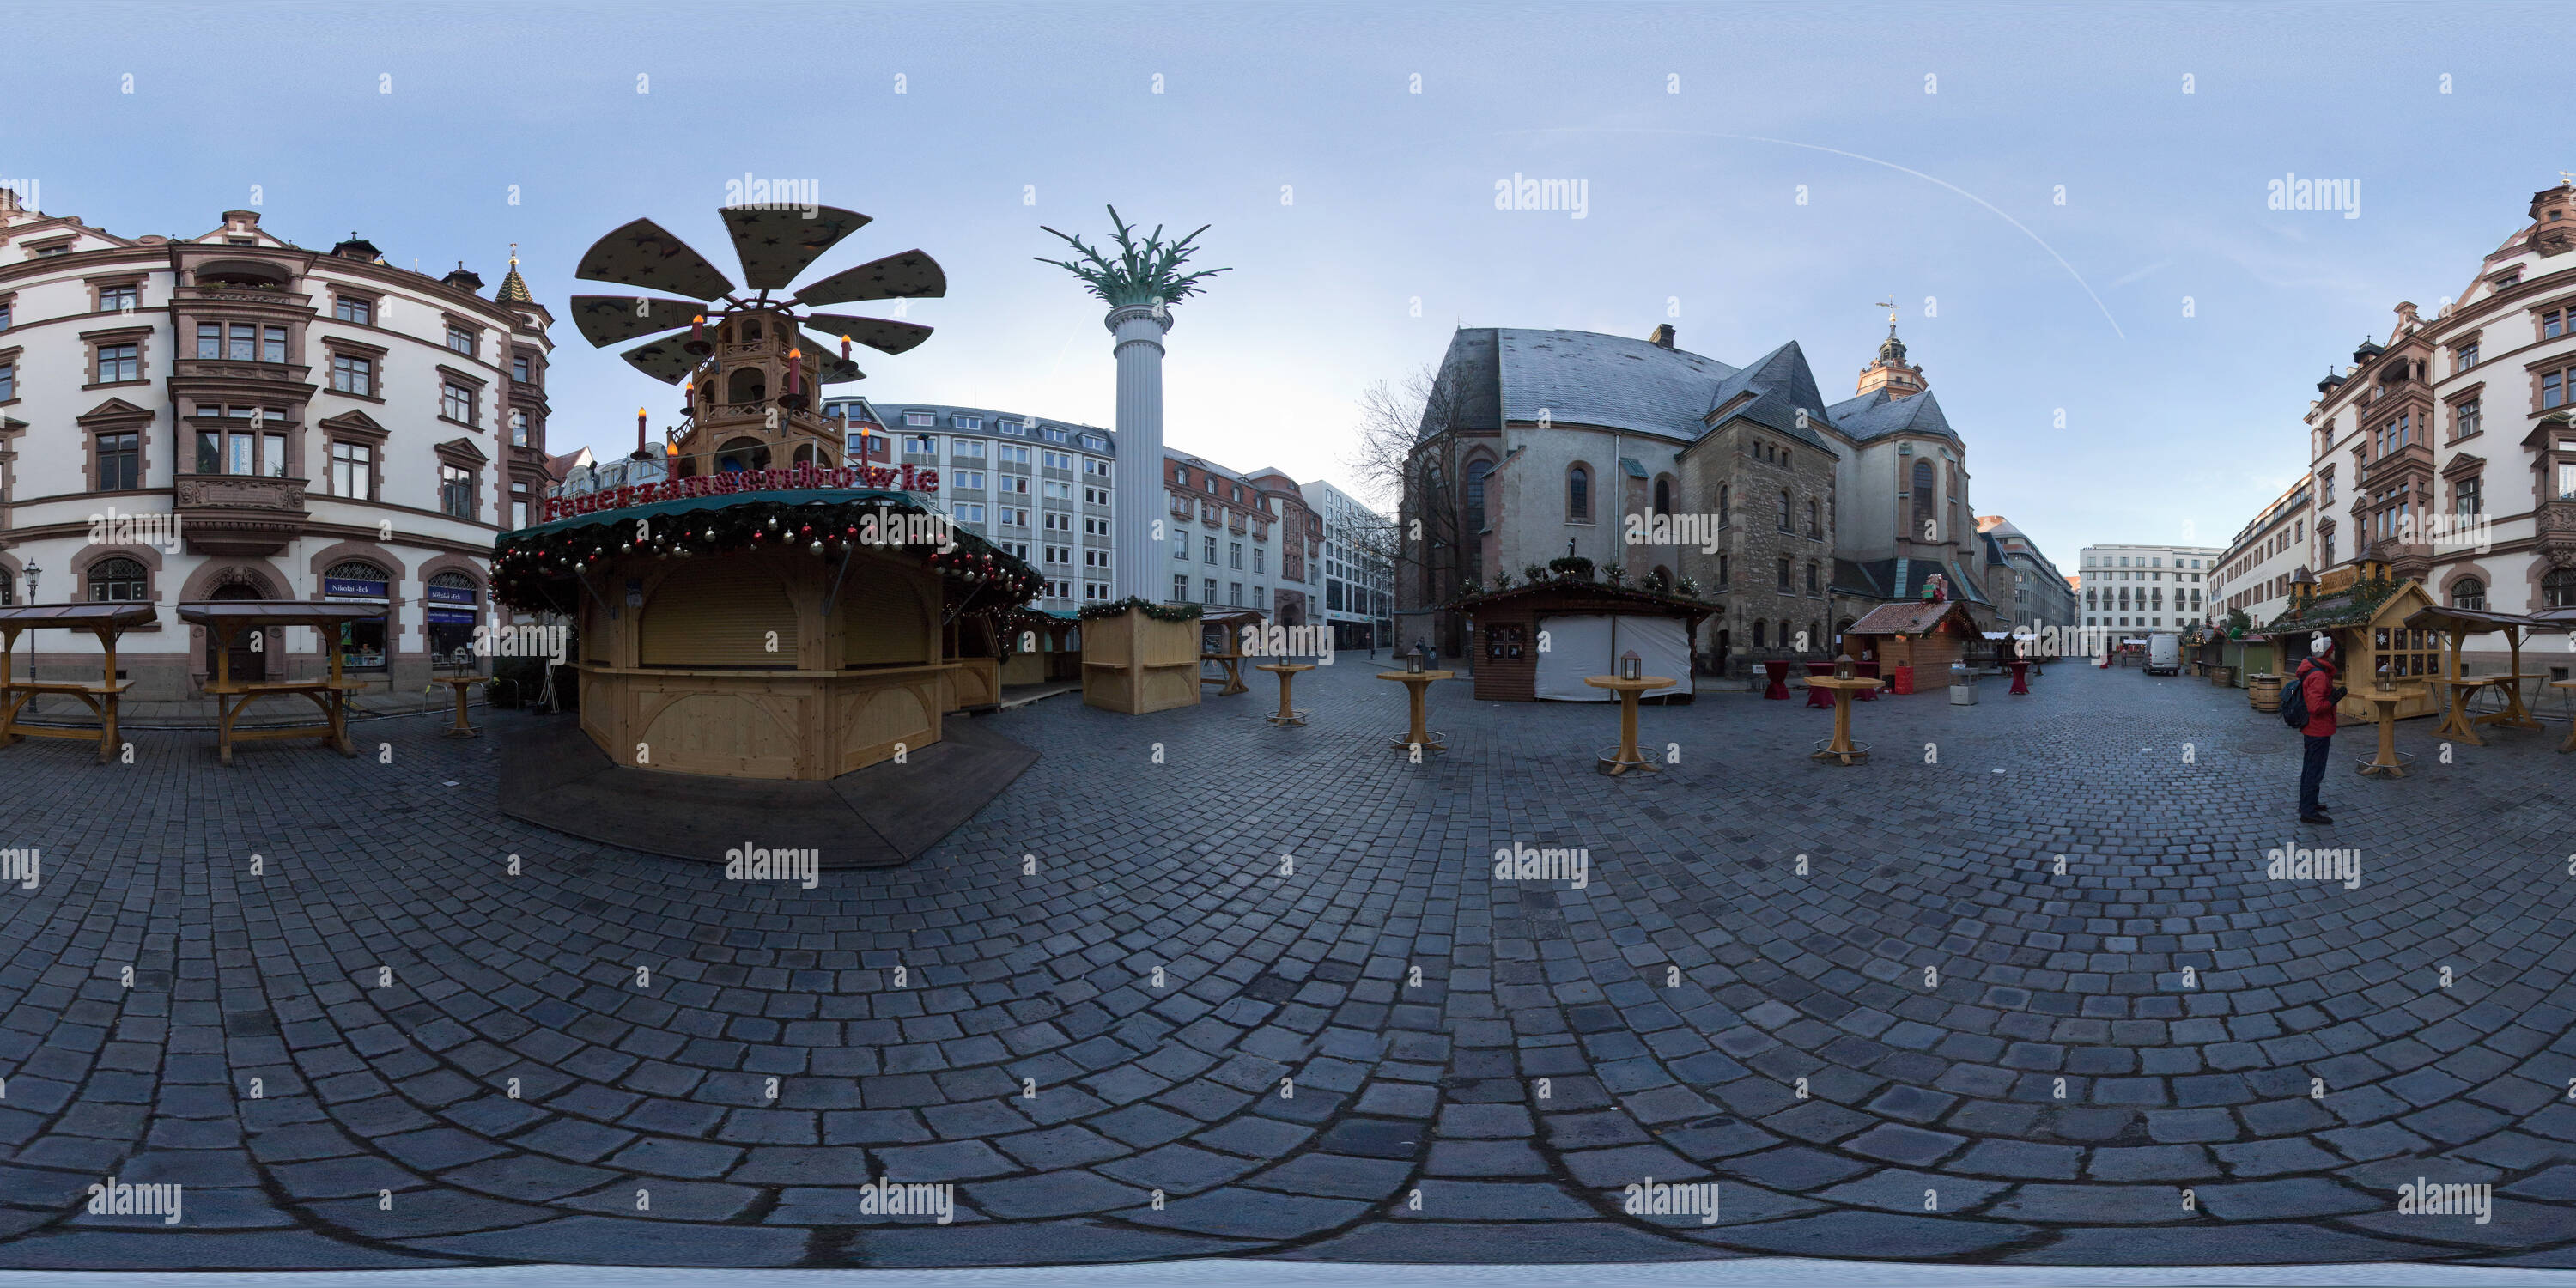 360 degree panoramic view of Nikolaikirchhof Nikolaisaeule Christmas Market, Leipzig, 2016-12, freehand